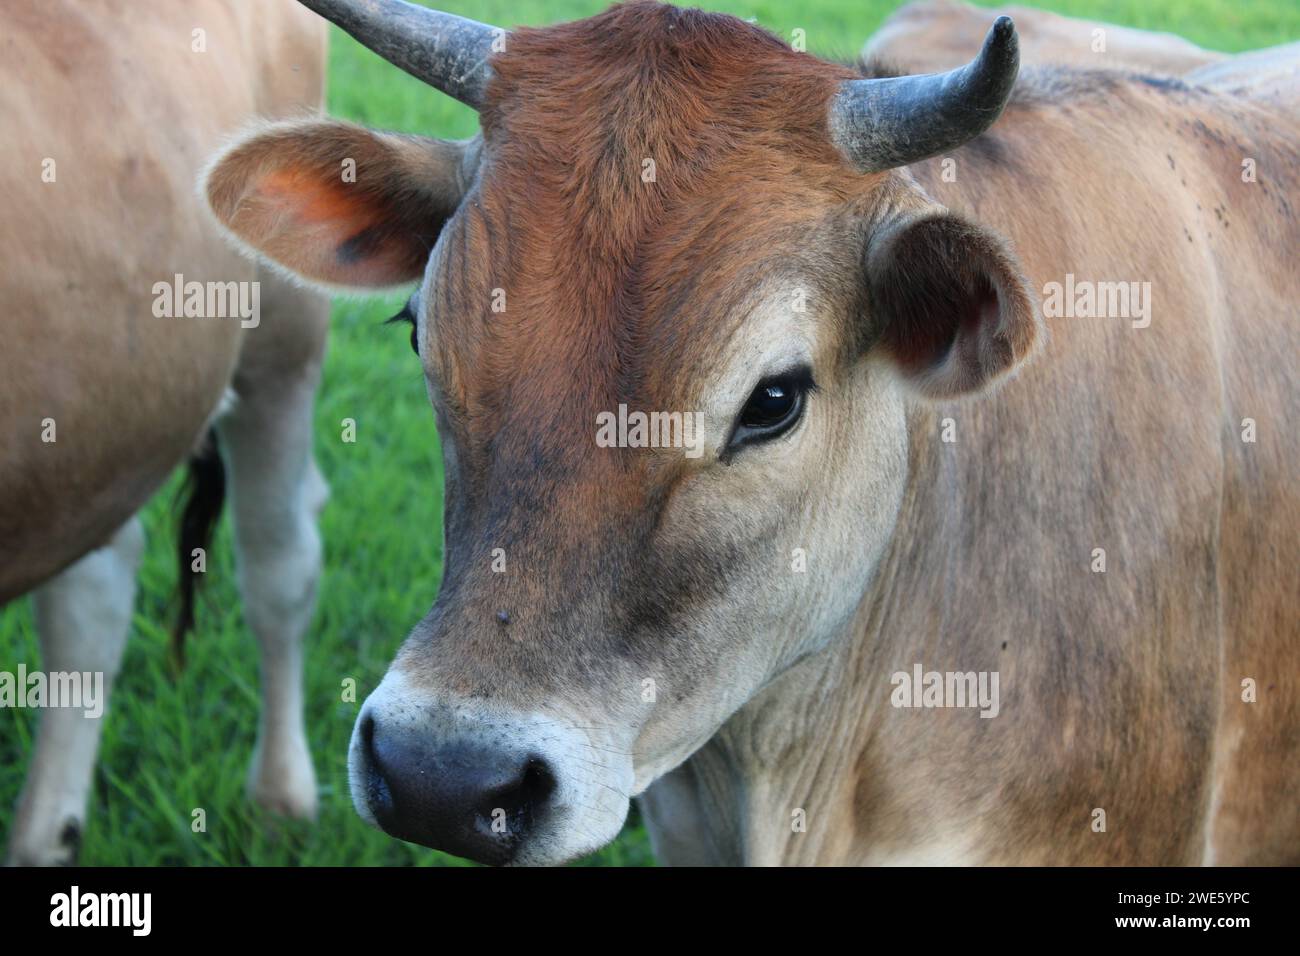 Dairy cows walking around in farm land grass field Stock Photo